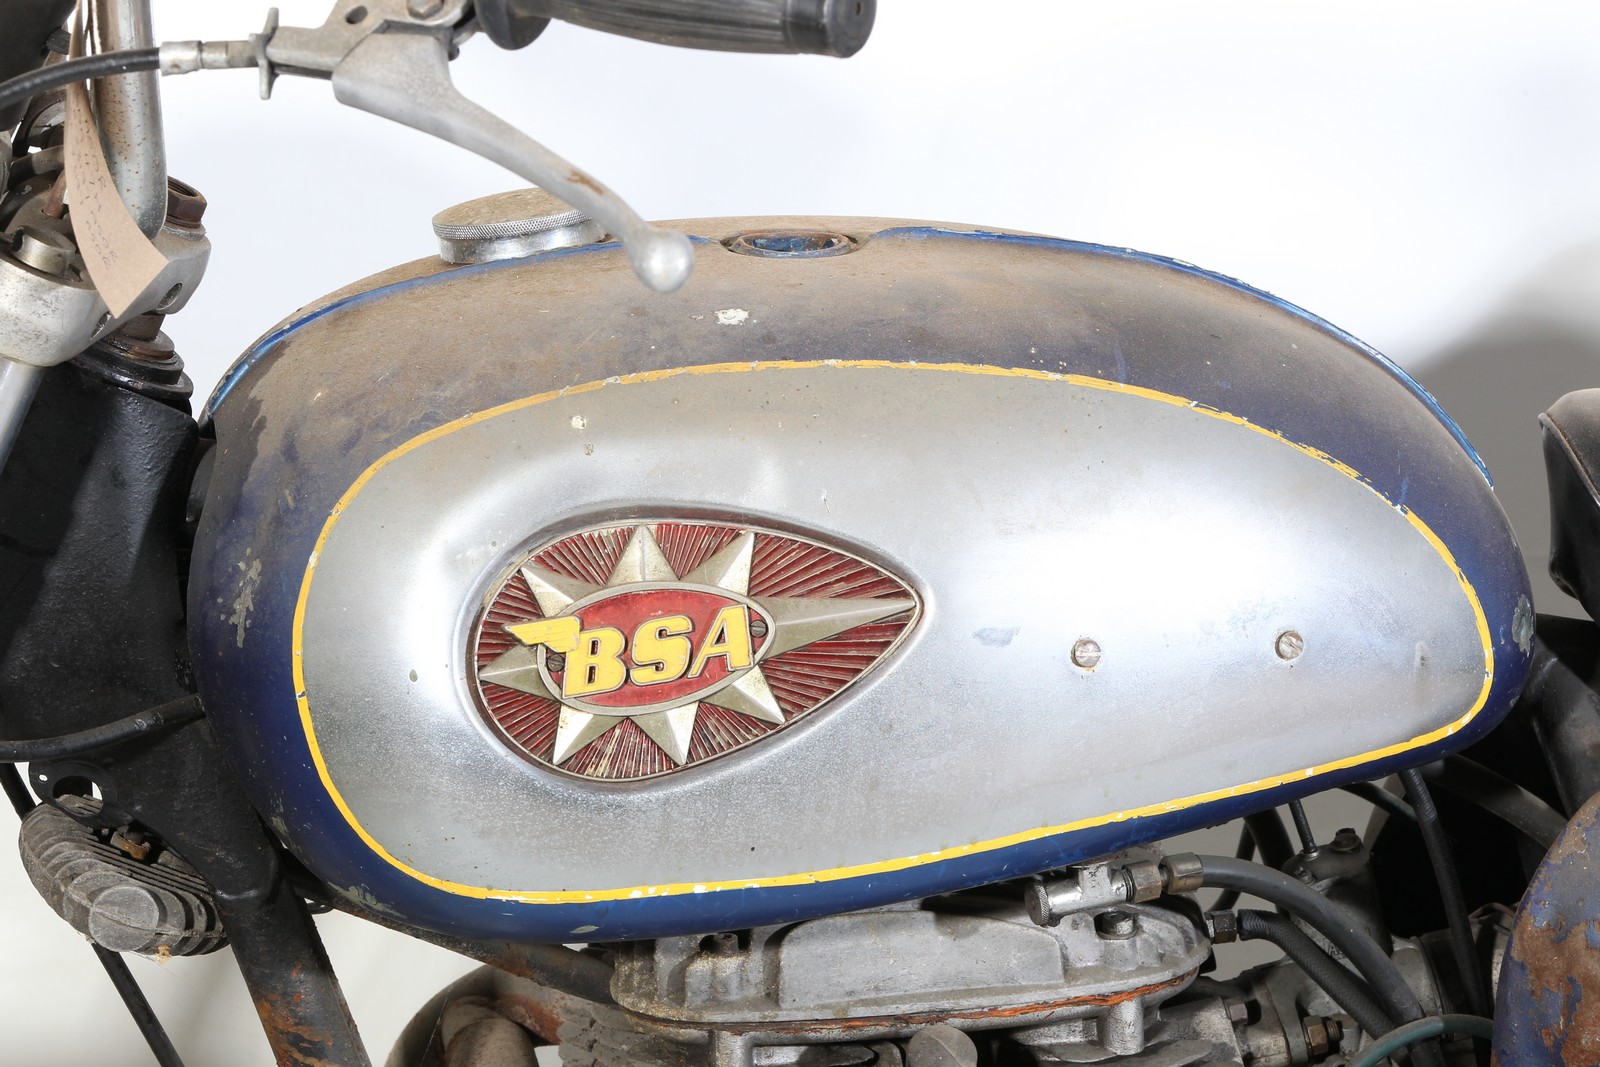 1969 BSA Royal Star 500cc - Image 4 of 6